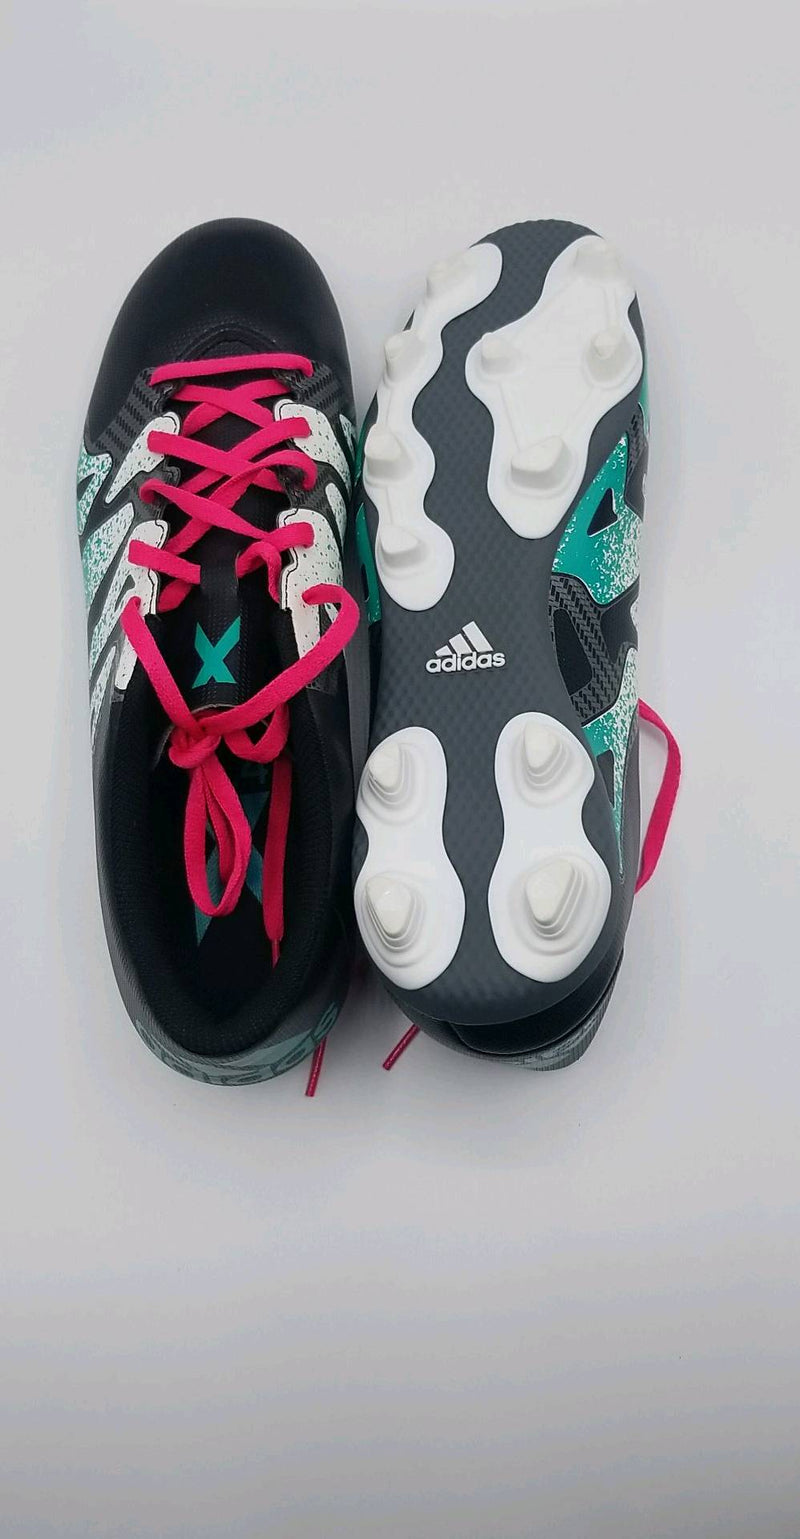 Used adidas Performance Men's X 15.4 Soccer Shoe,Black/Shock Mint/White,11.5 M US - lauxsportinggoods